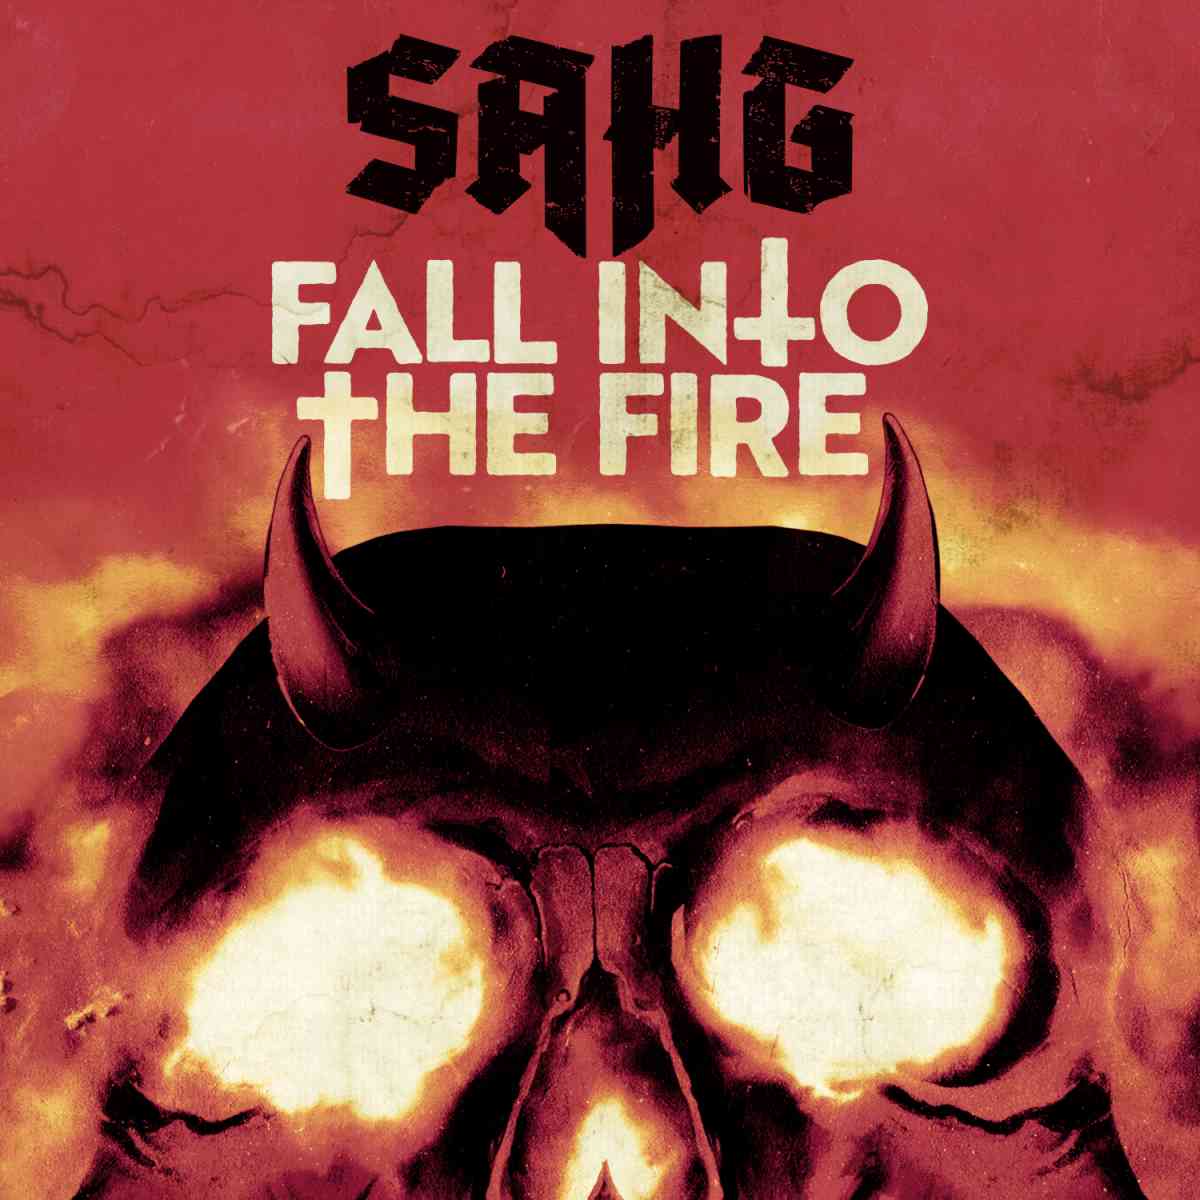 SAHG - FALL INTO THE FIRE - single cover